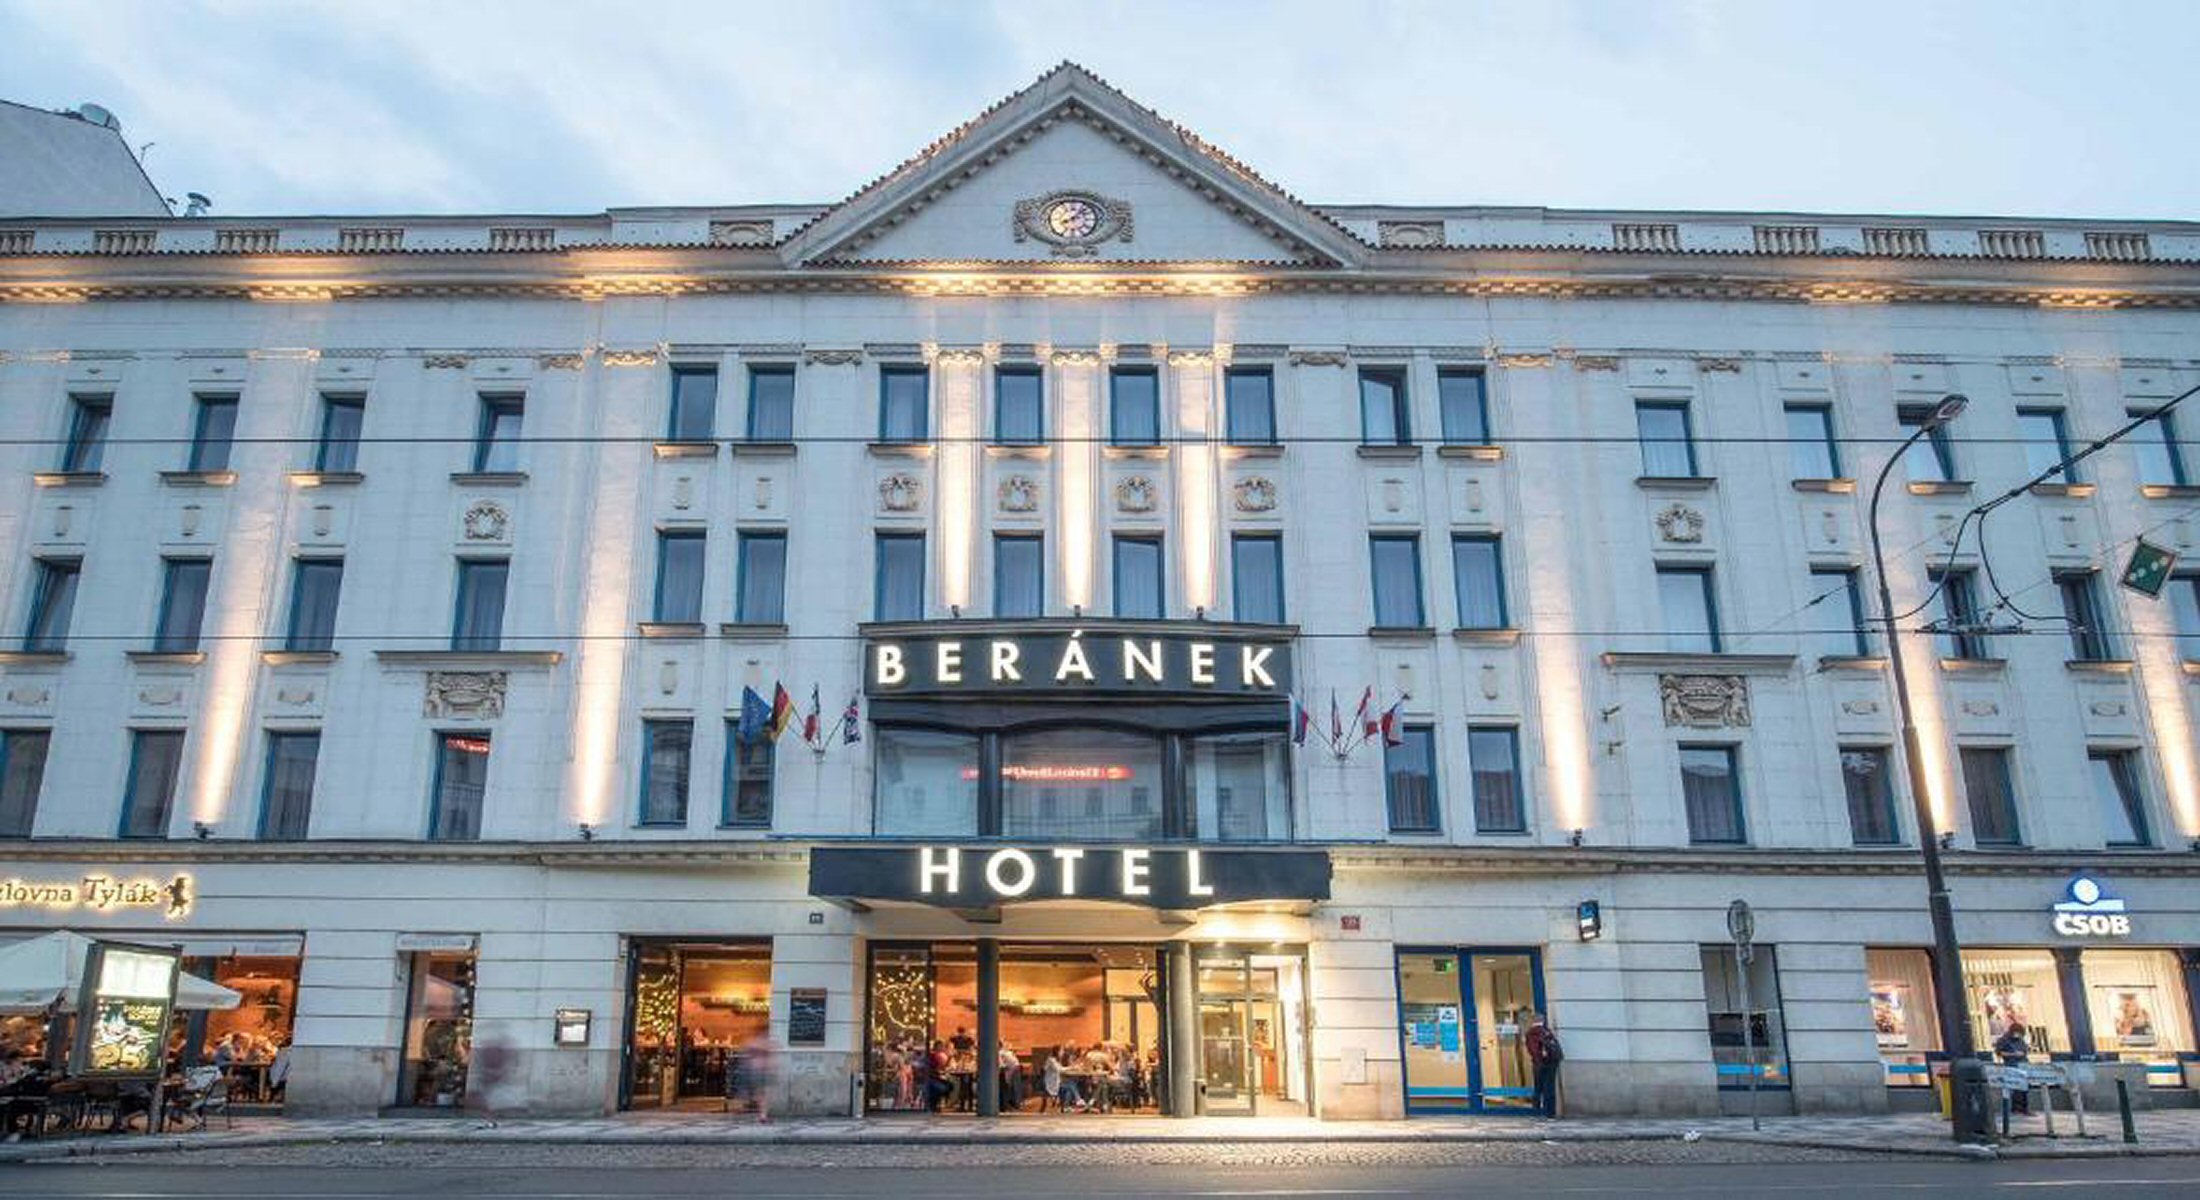 Hotel Beranek photo 1 - full size